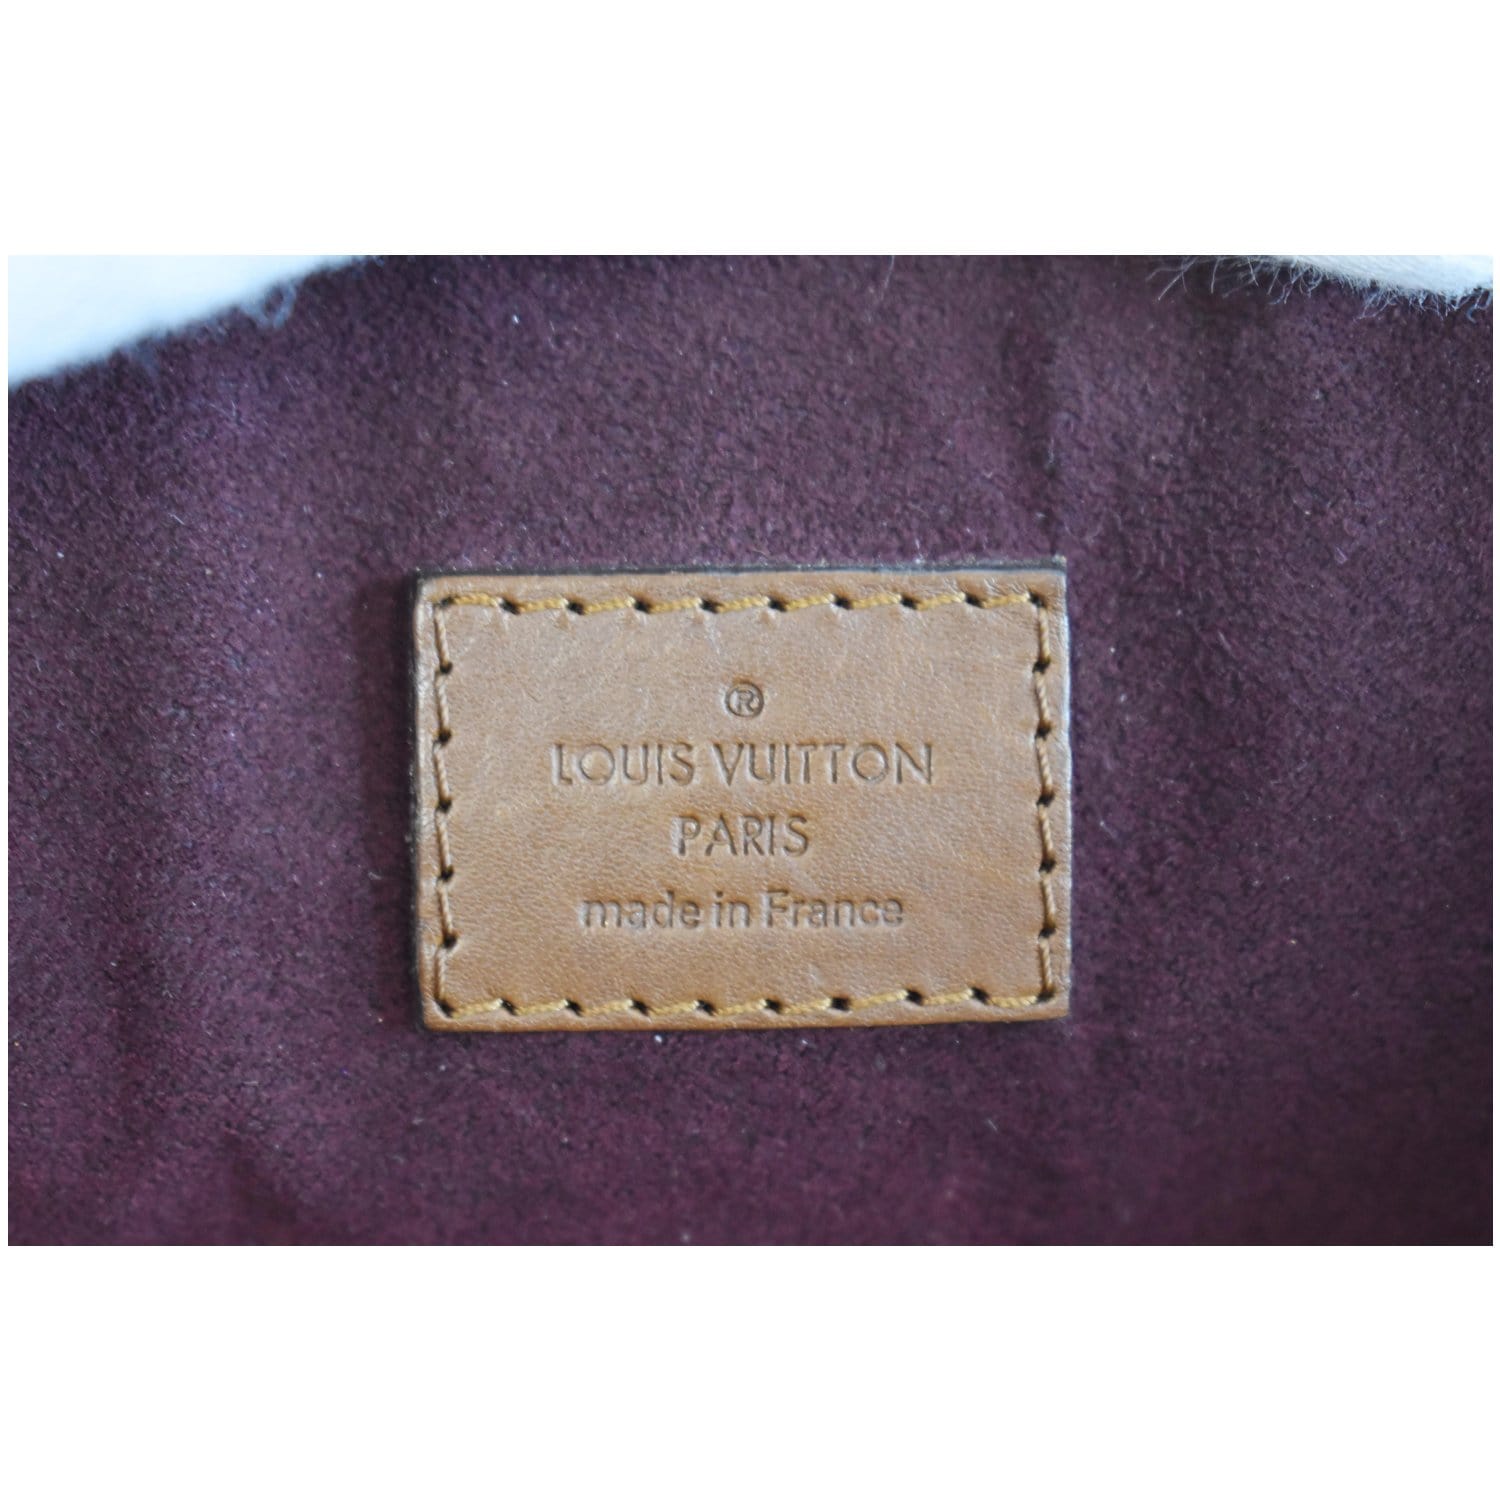 Louis Vuitton pre-owned Damier Ebène Belmont MM two-way bag